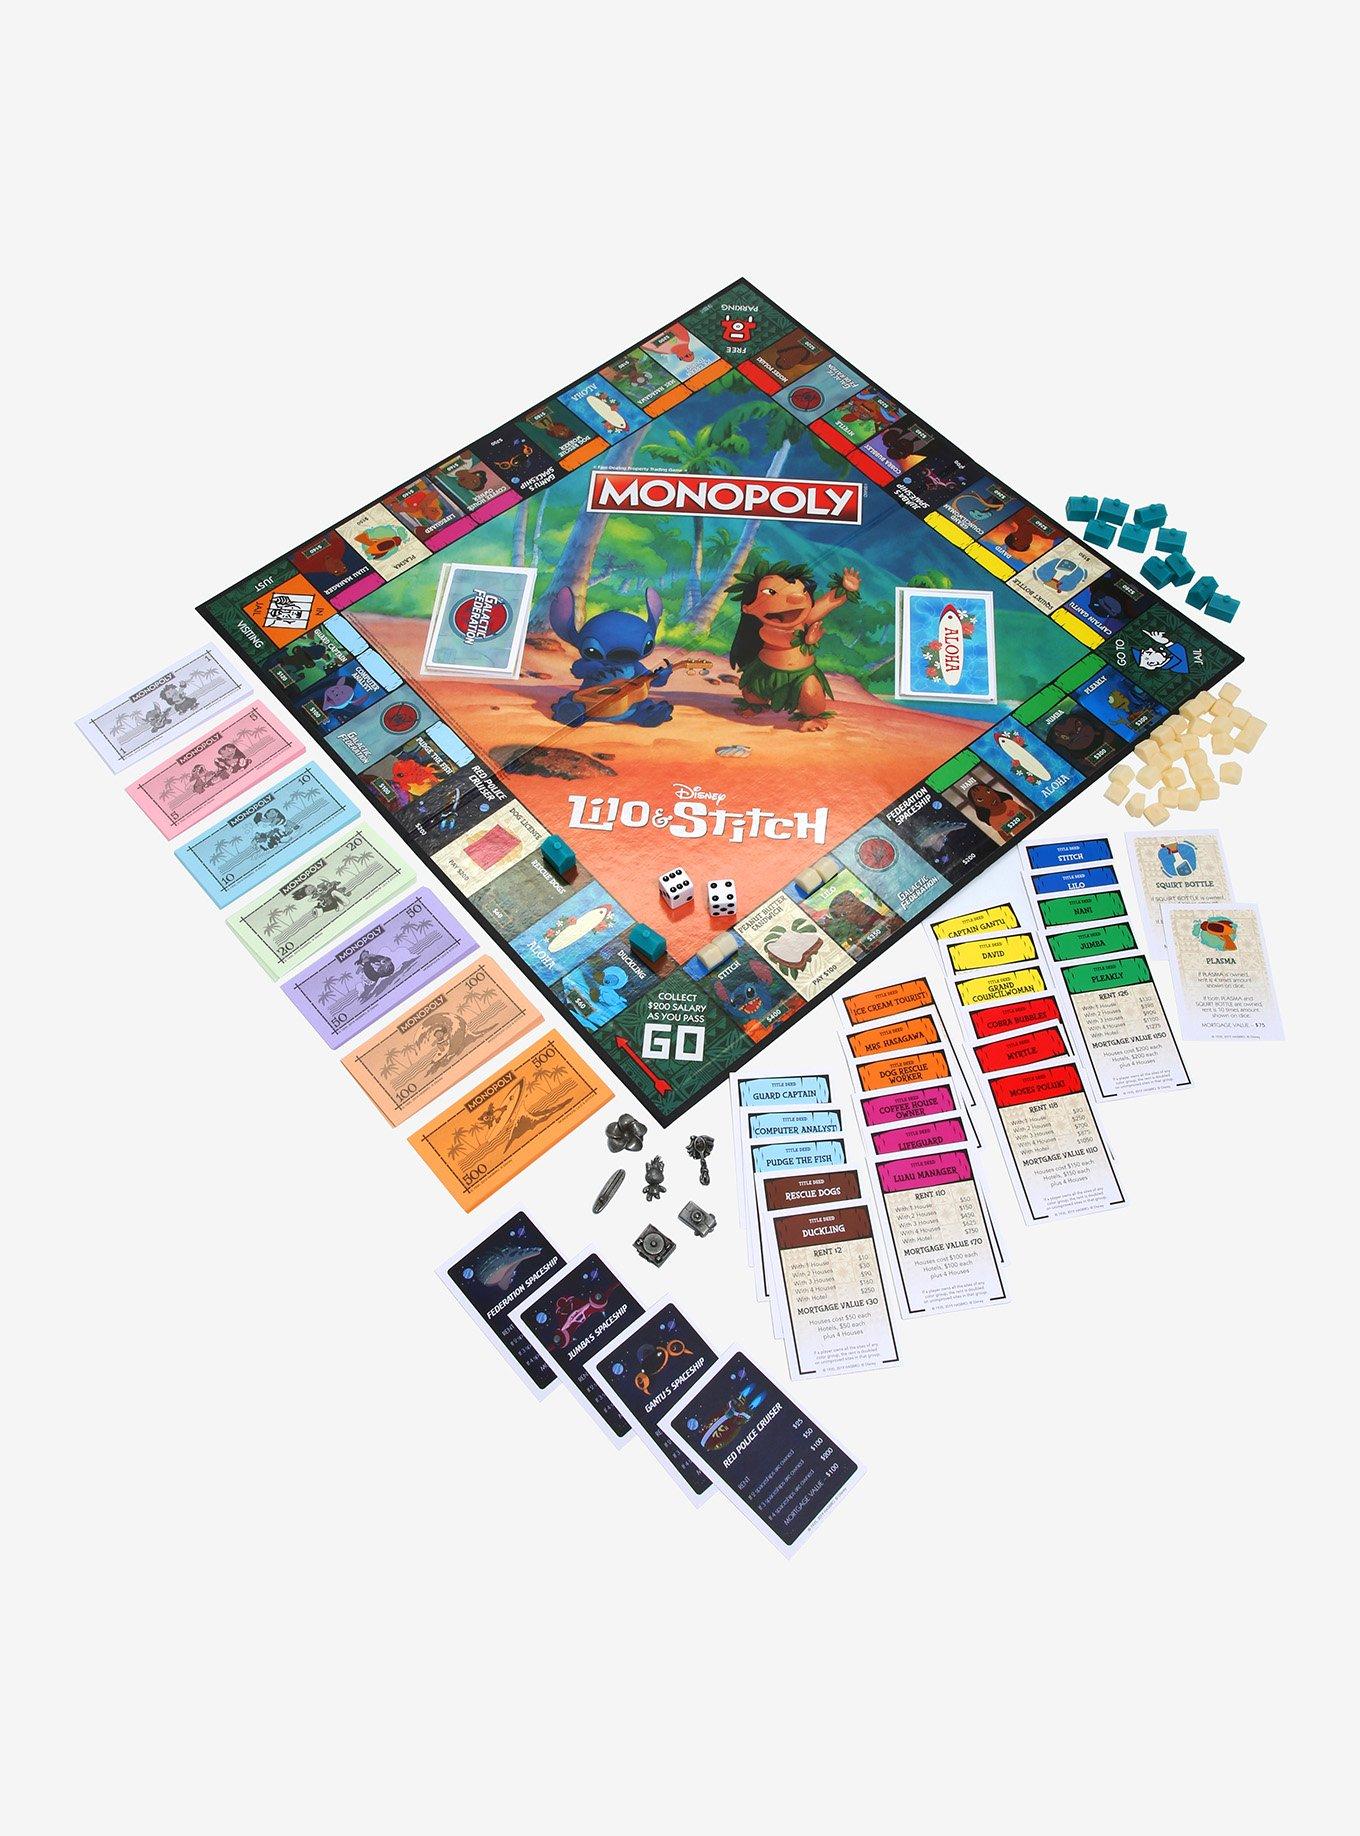 MONOPOLY DISNEY LILO & Stitch Board Game SEALED Hot Topic